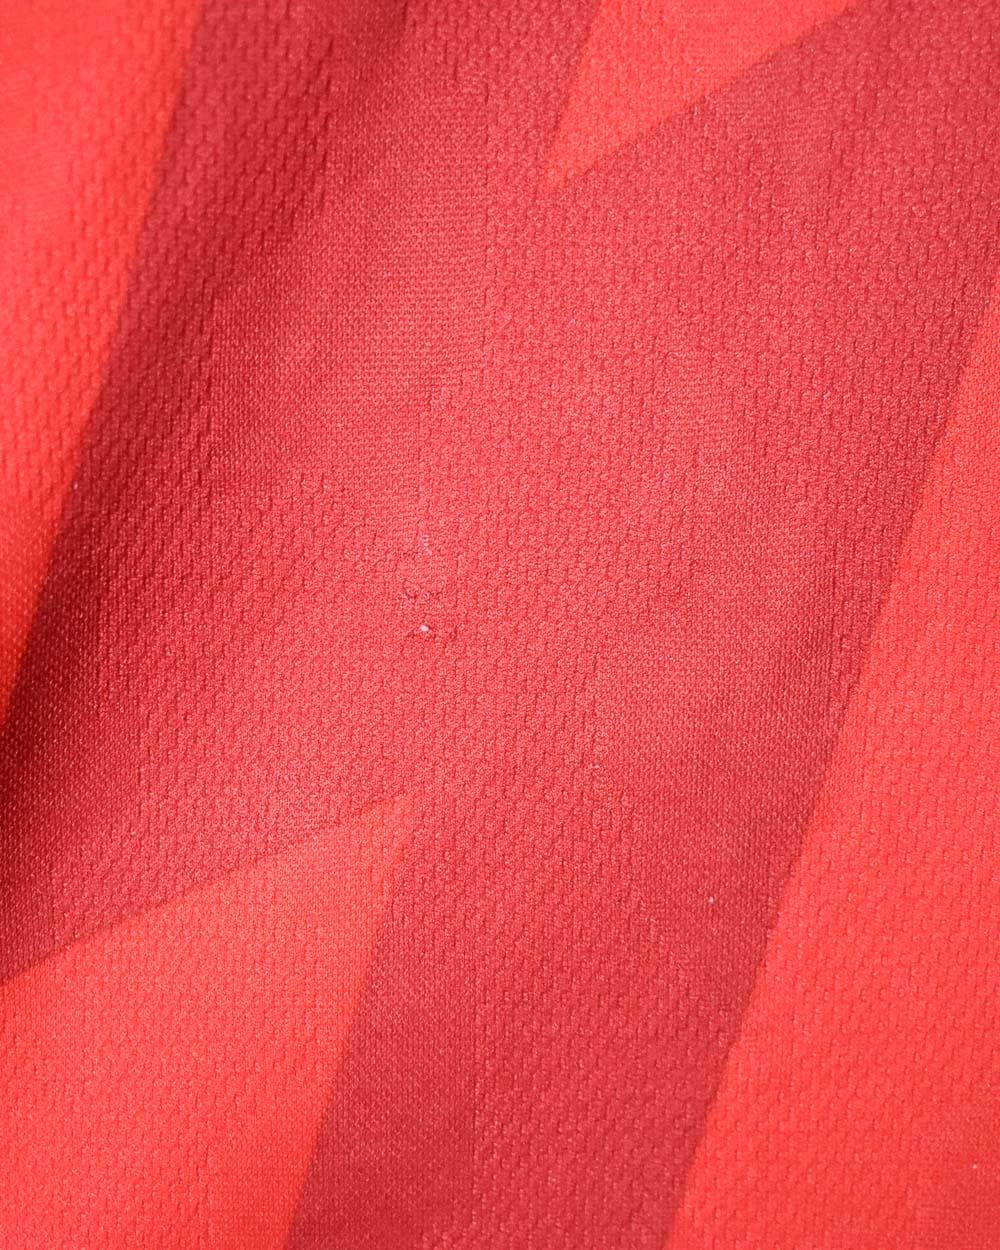 Red Nike Team Collared Long Sleeved Football Shirt - Medium